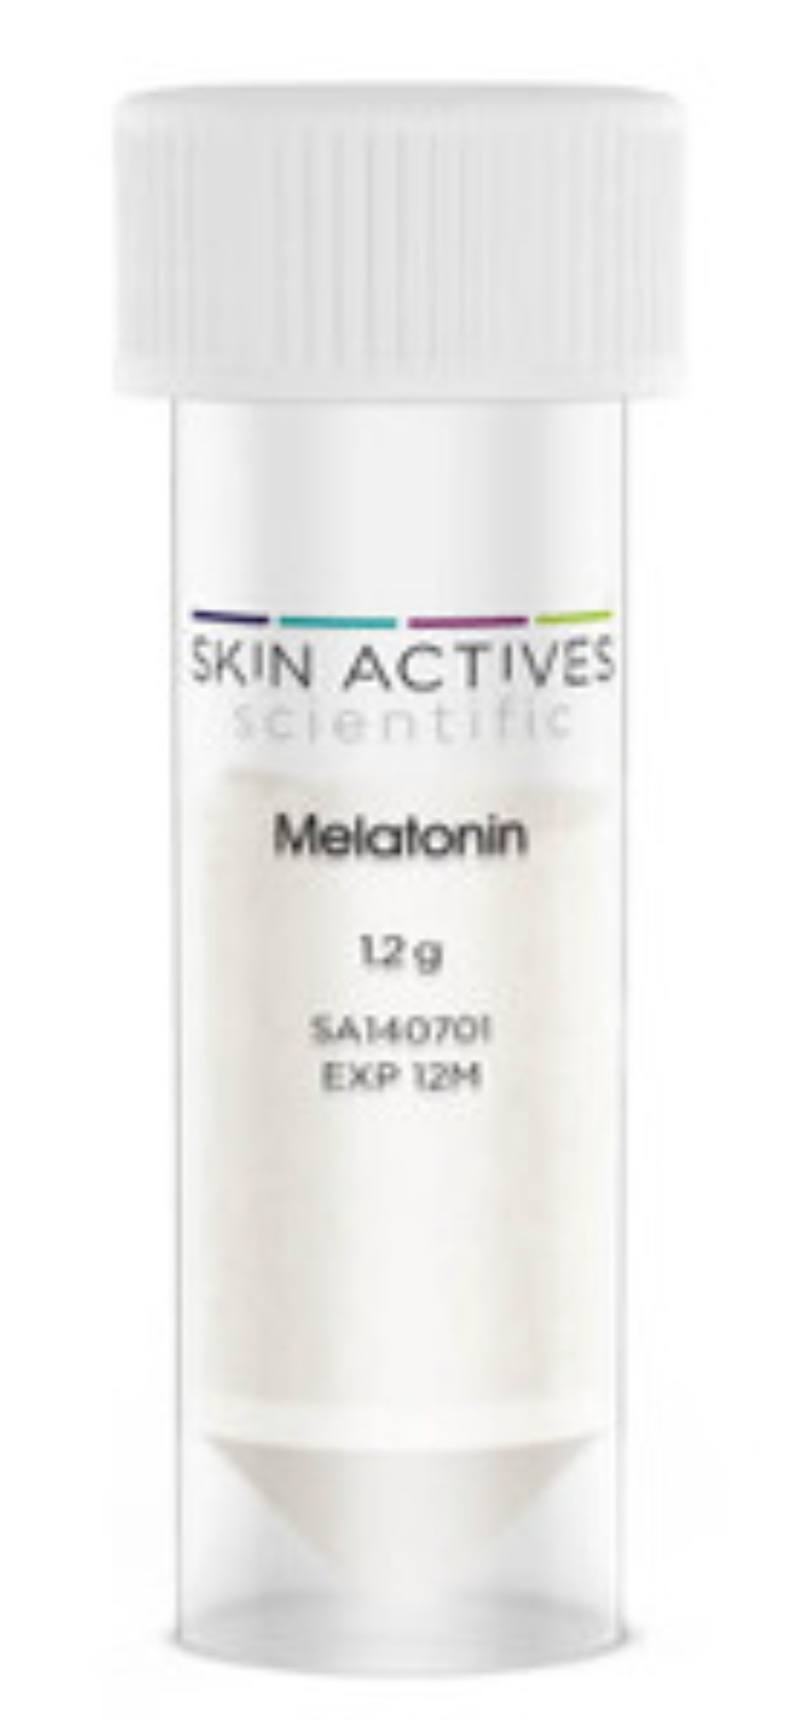 Skin Actives Scientific Melatonin Powder